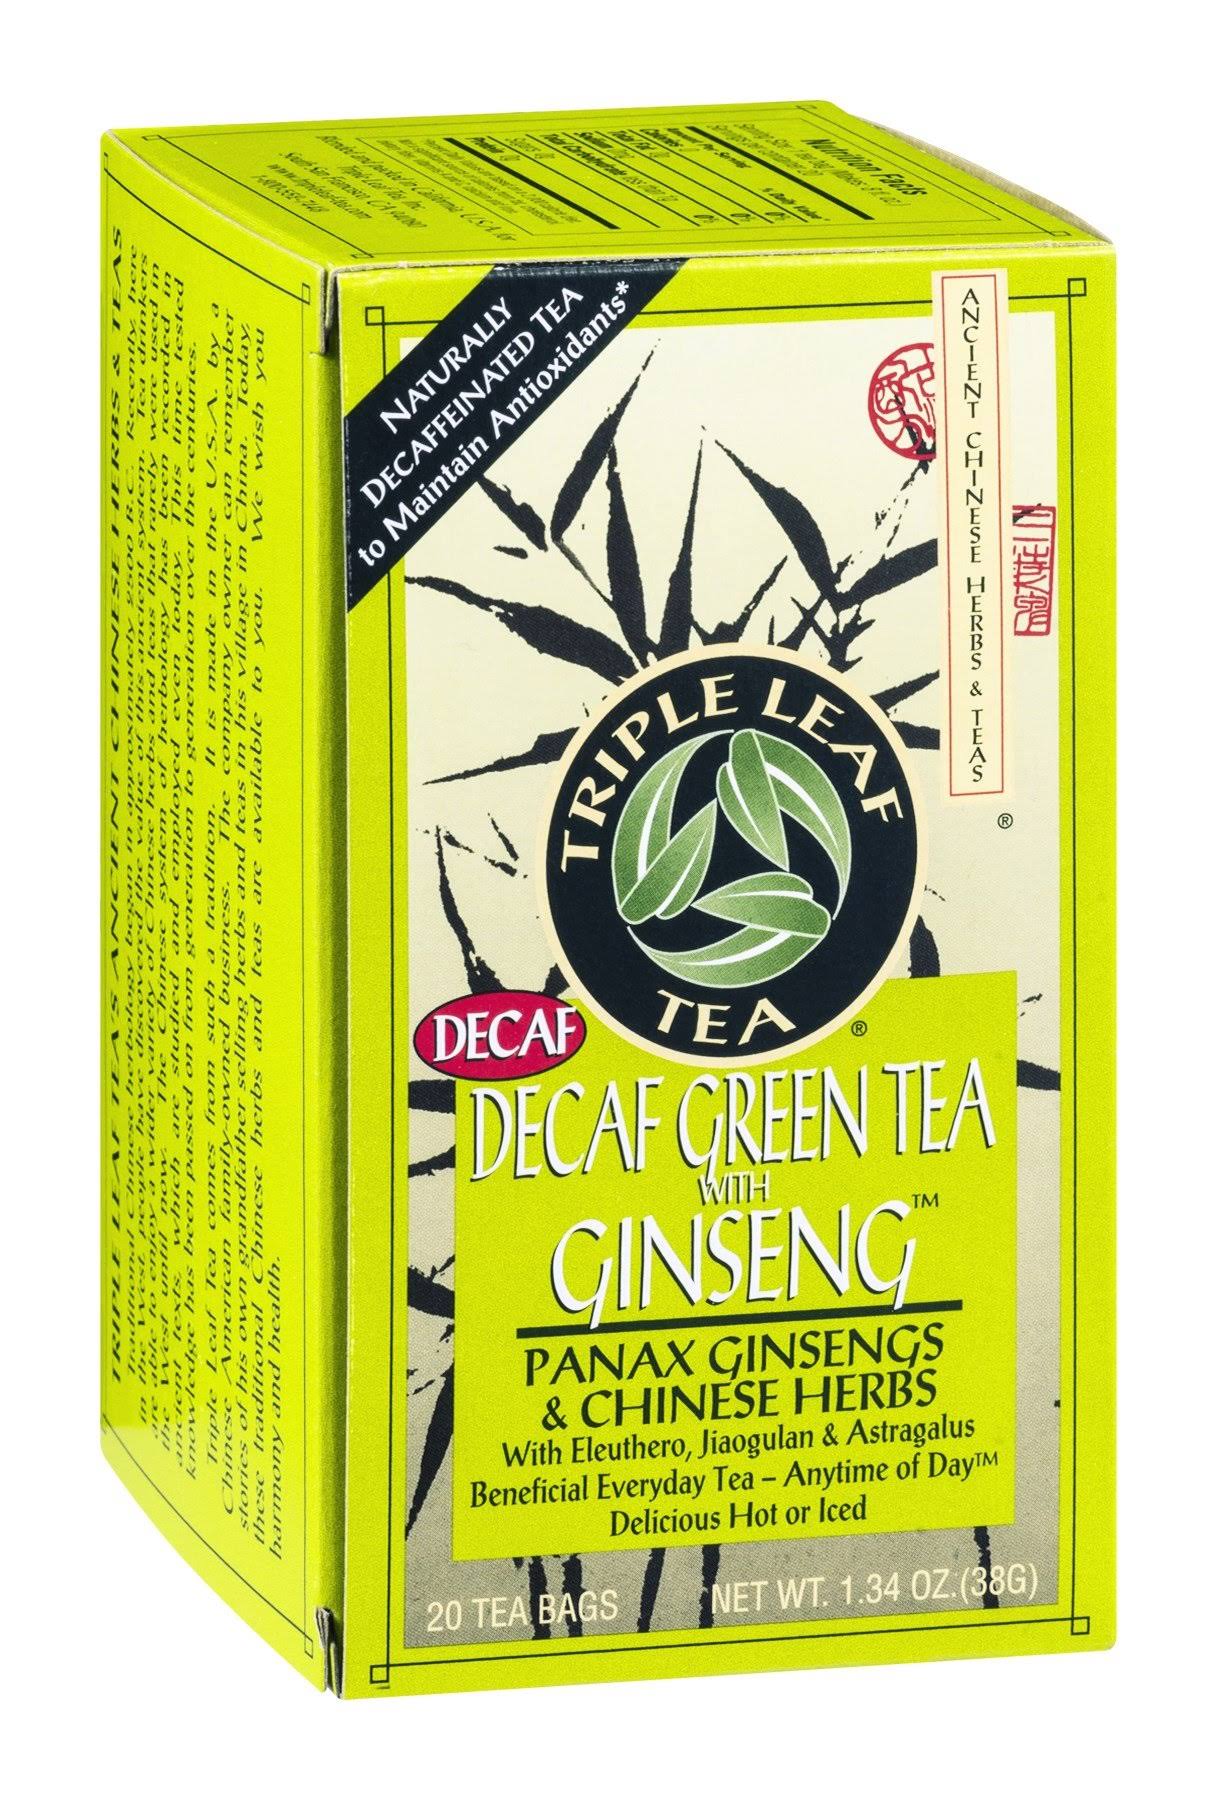 Triple Leaf Tea Decaf Green Tea - Ginseng, 20 Bags, 40g